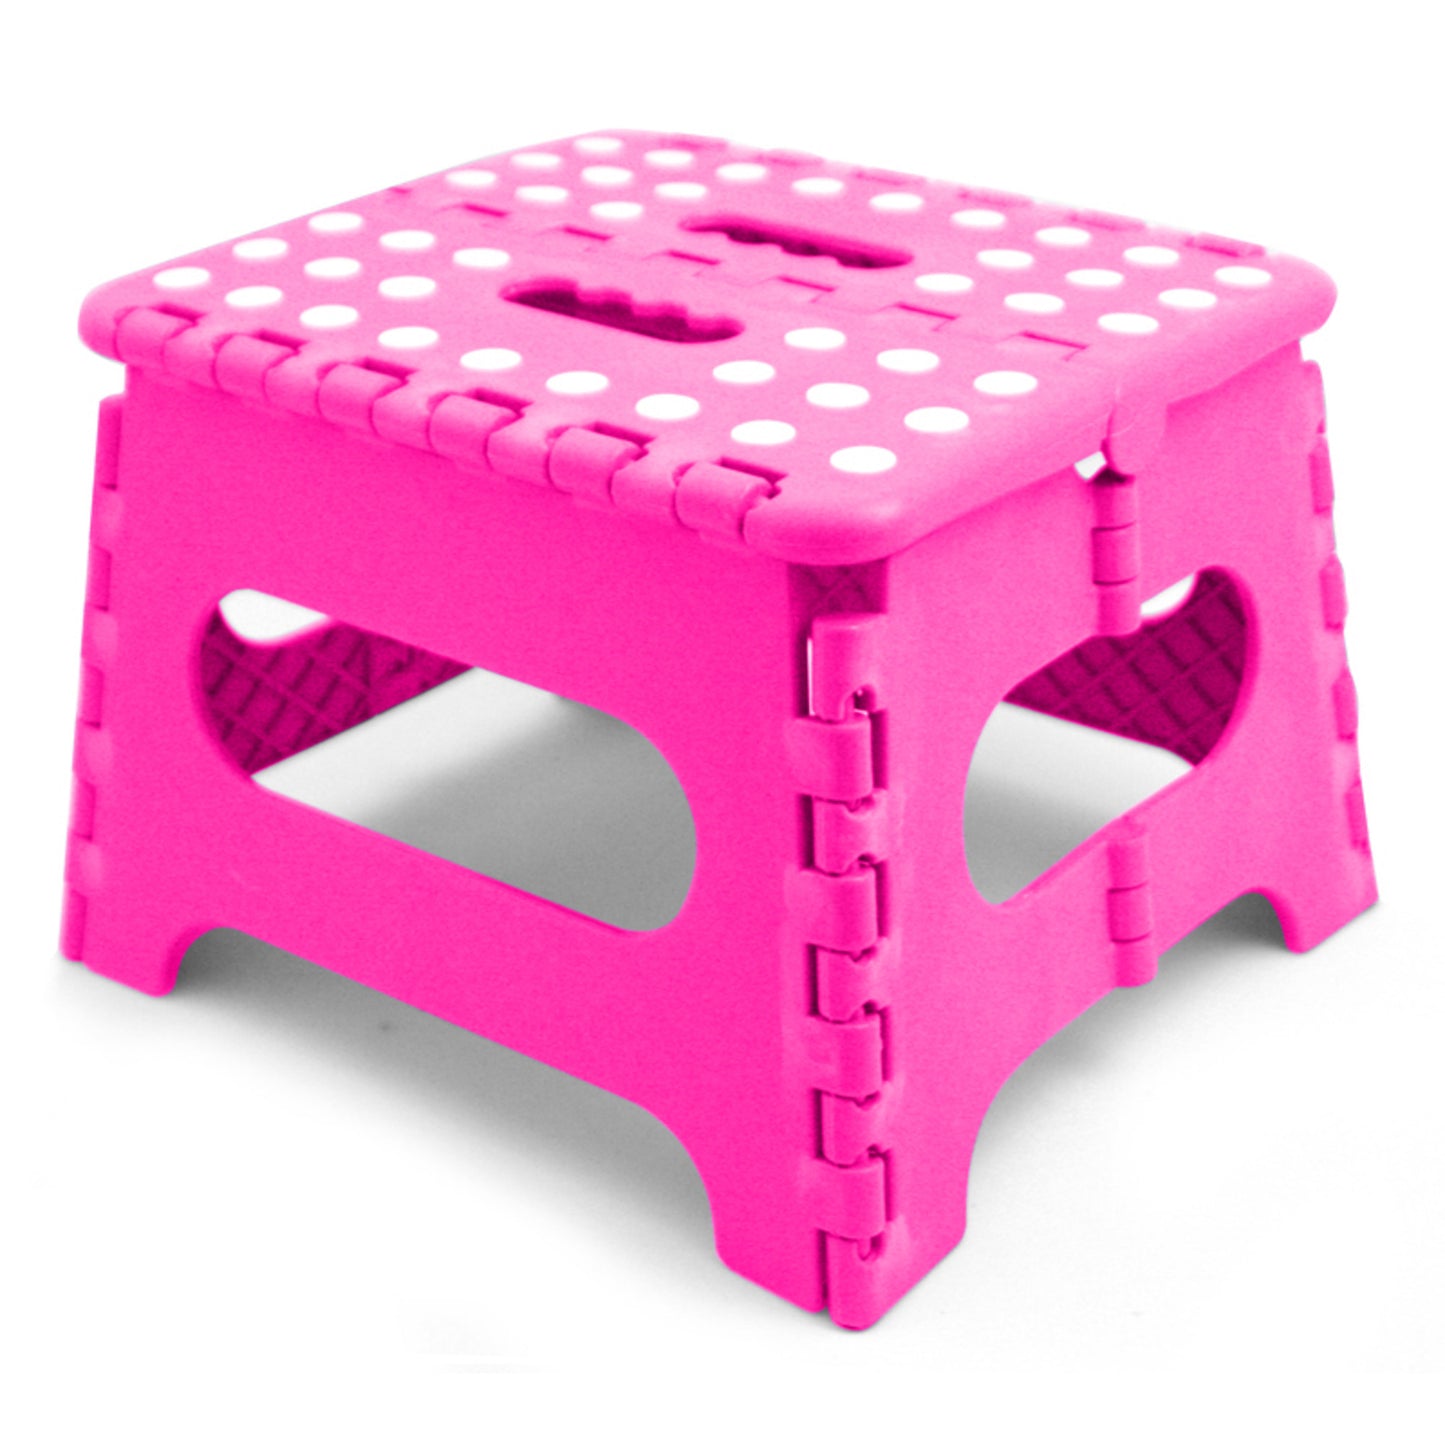 Home Basics Medium Plastic Folding Stool with Non-Slip Dots, Pink - Pink